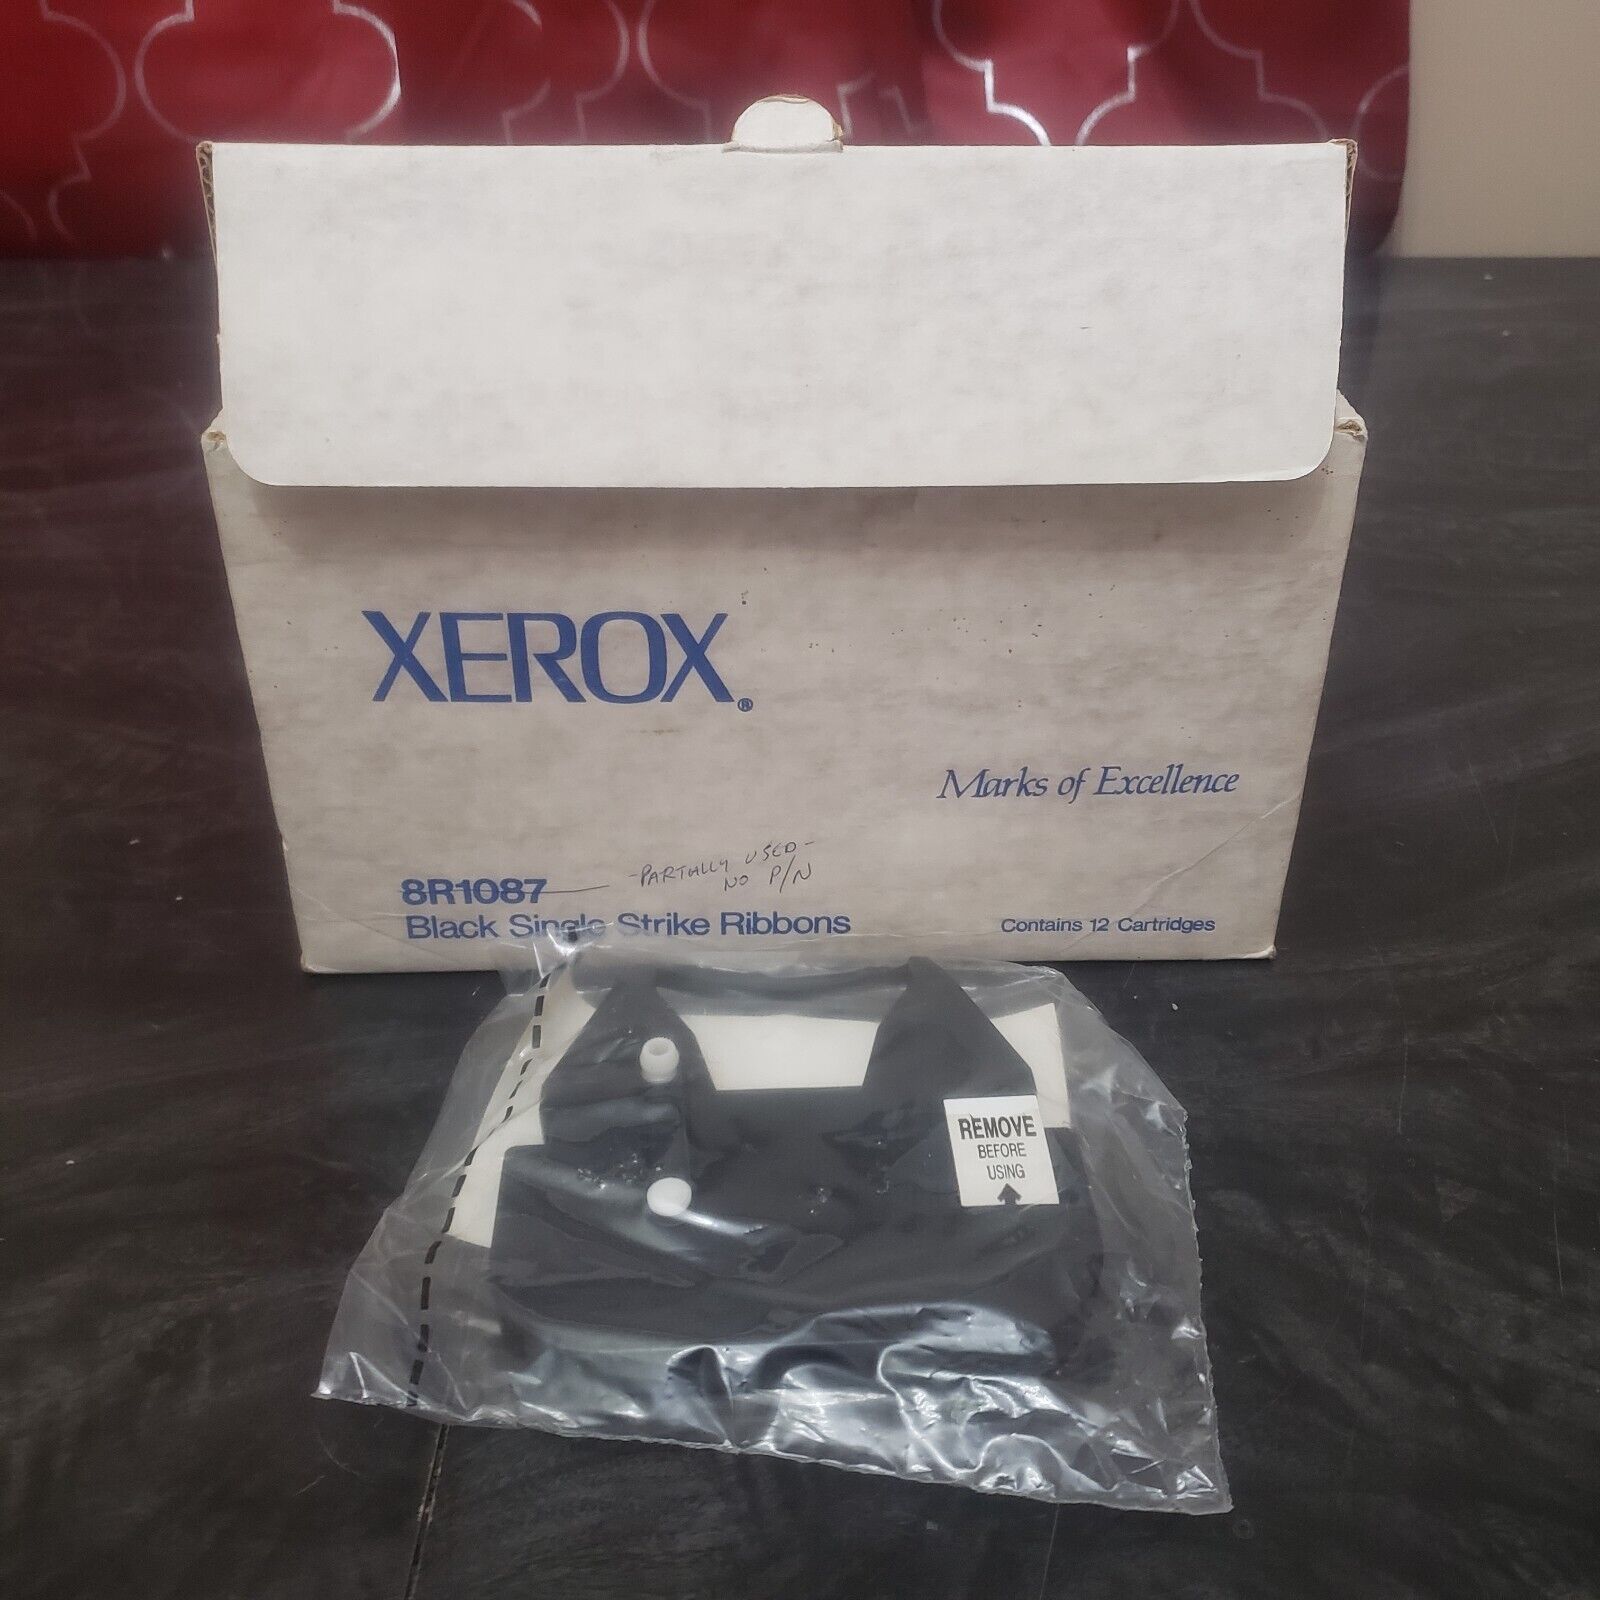 Genuine Xerox 8R1087 Print Ribbon Cartridges 12-Pack for HyType II Model 630 OEM